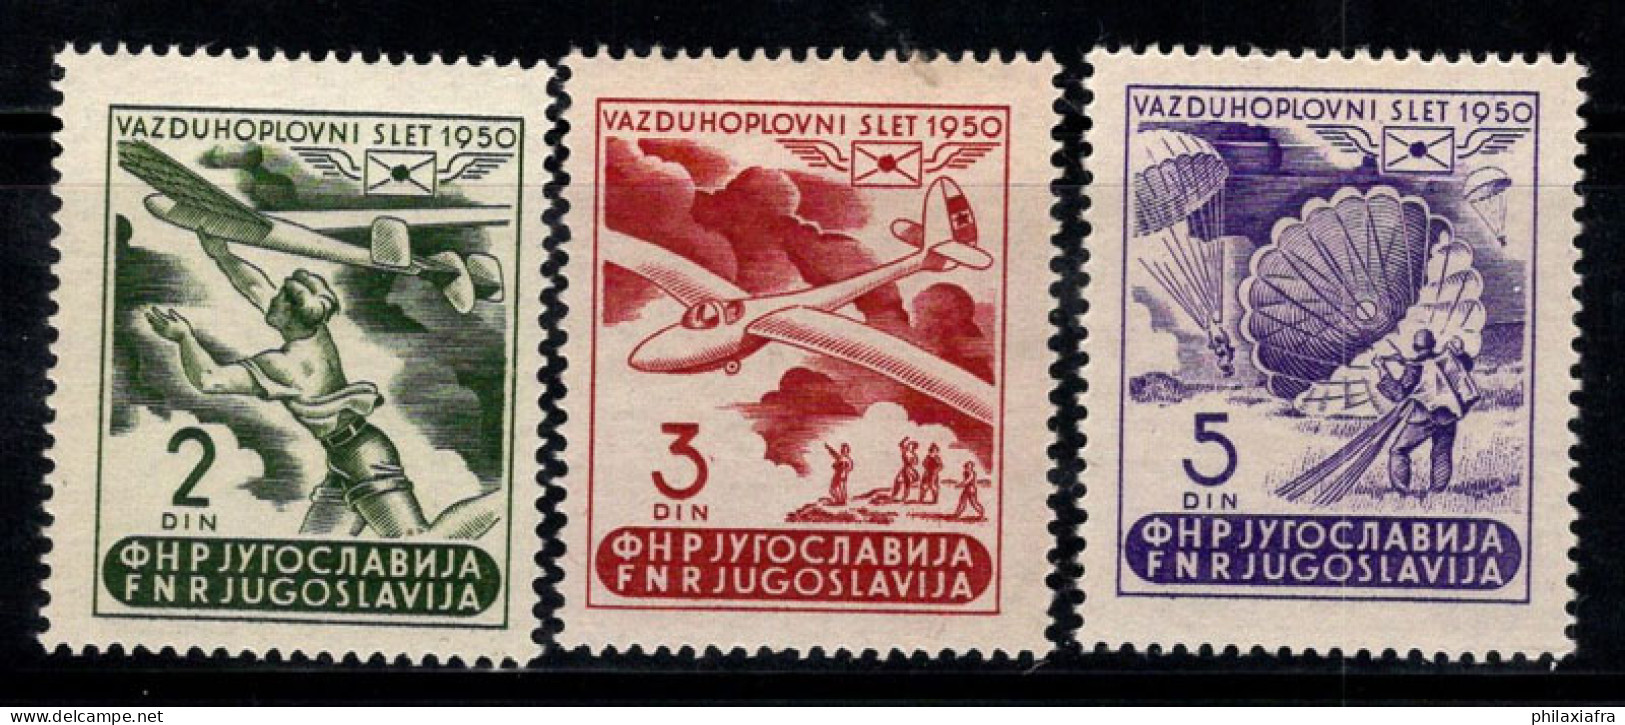 Yougoslavie 1949 Mi. 611-613 Neuf ** 100% Poste Aérienne AÉRONEF - Airmail